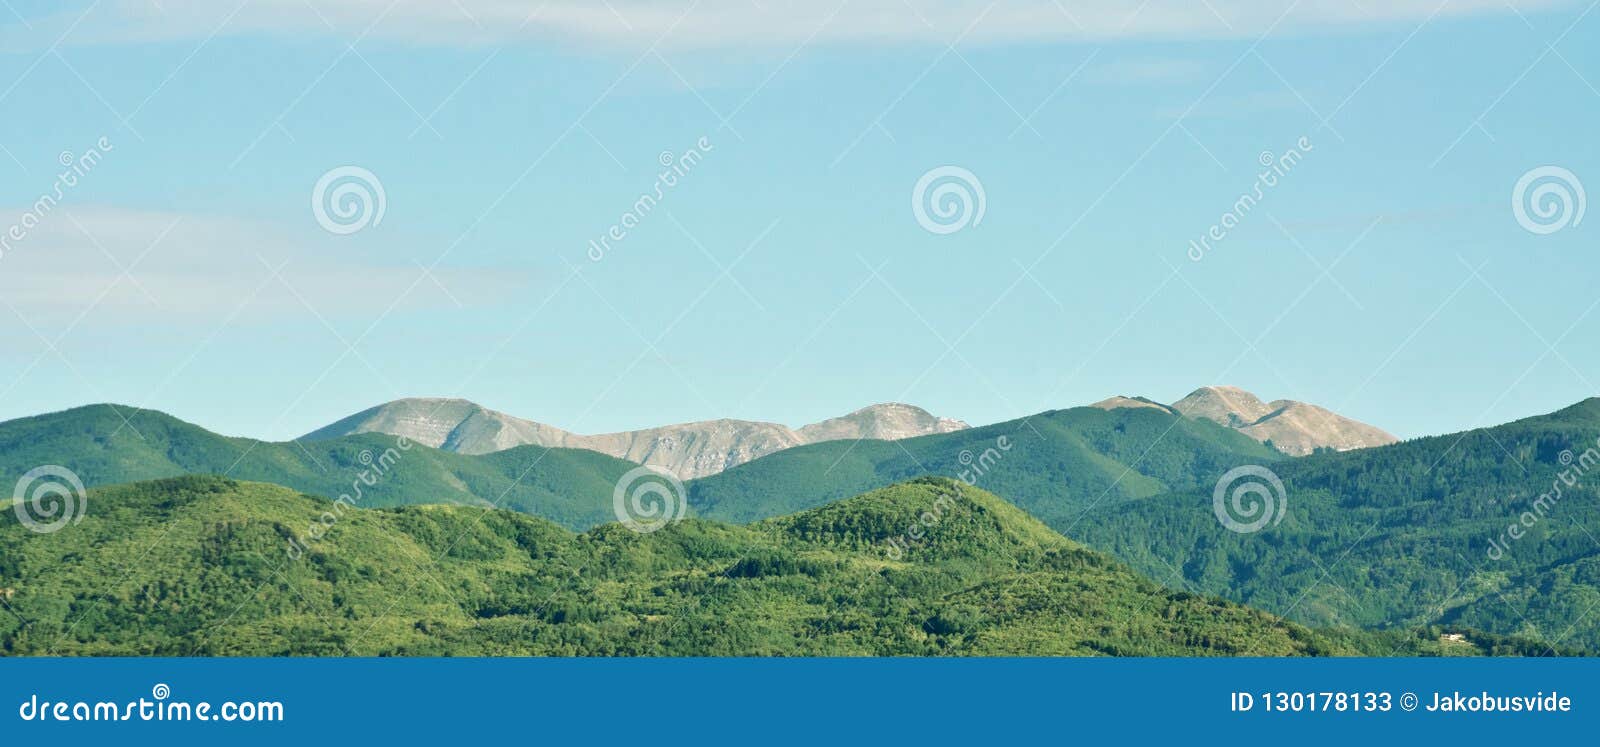 high appennino tosco emiliano mountains seen from pistoia tuscany italy